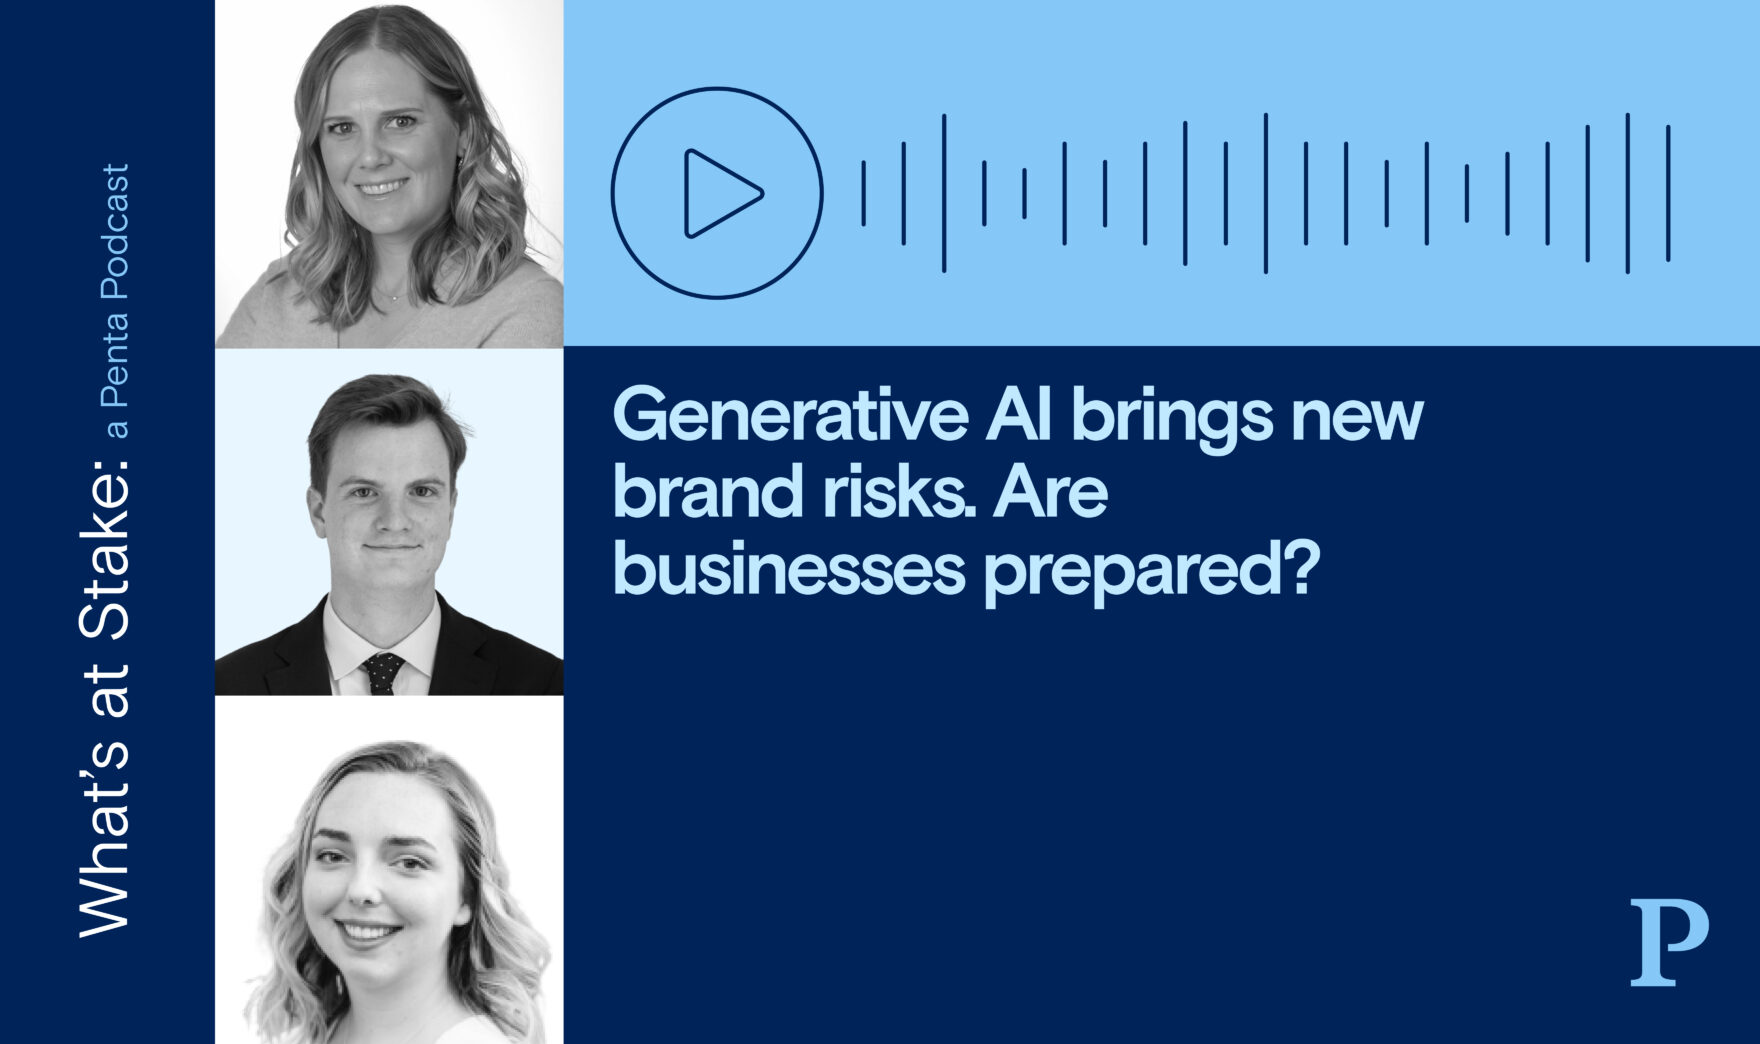 Generative AI brings new brand risks. Are businesses prepared?